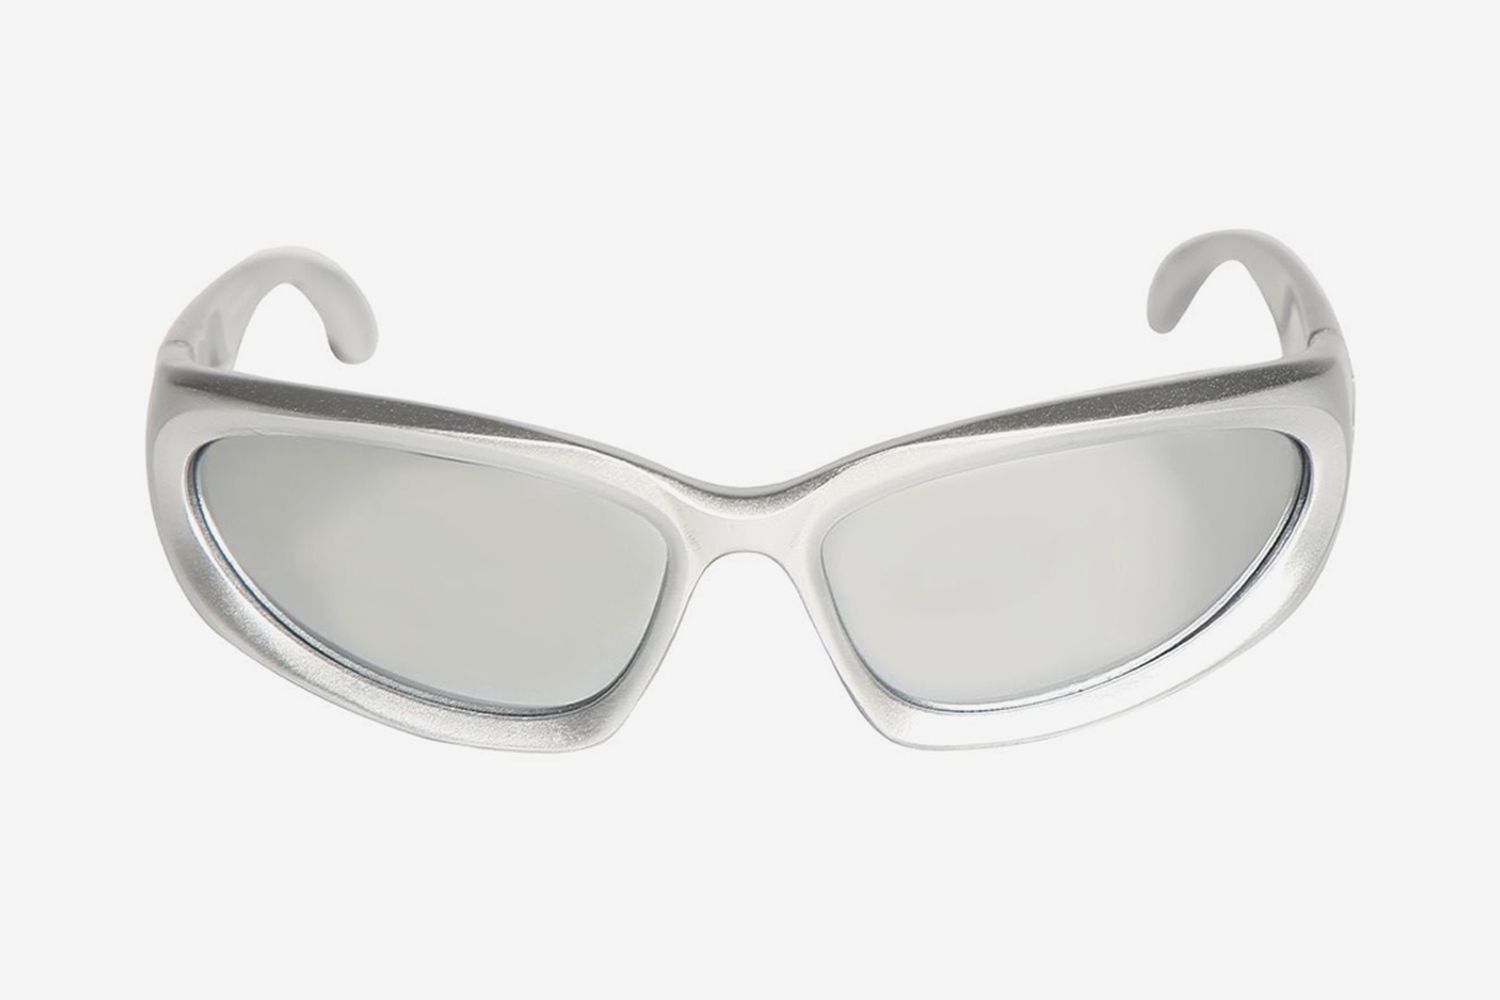 Swift Oval 0157s Sunglasses